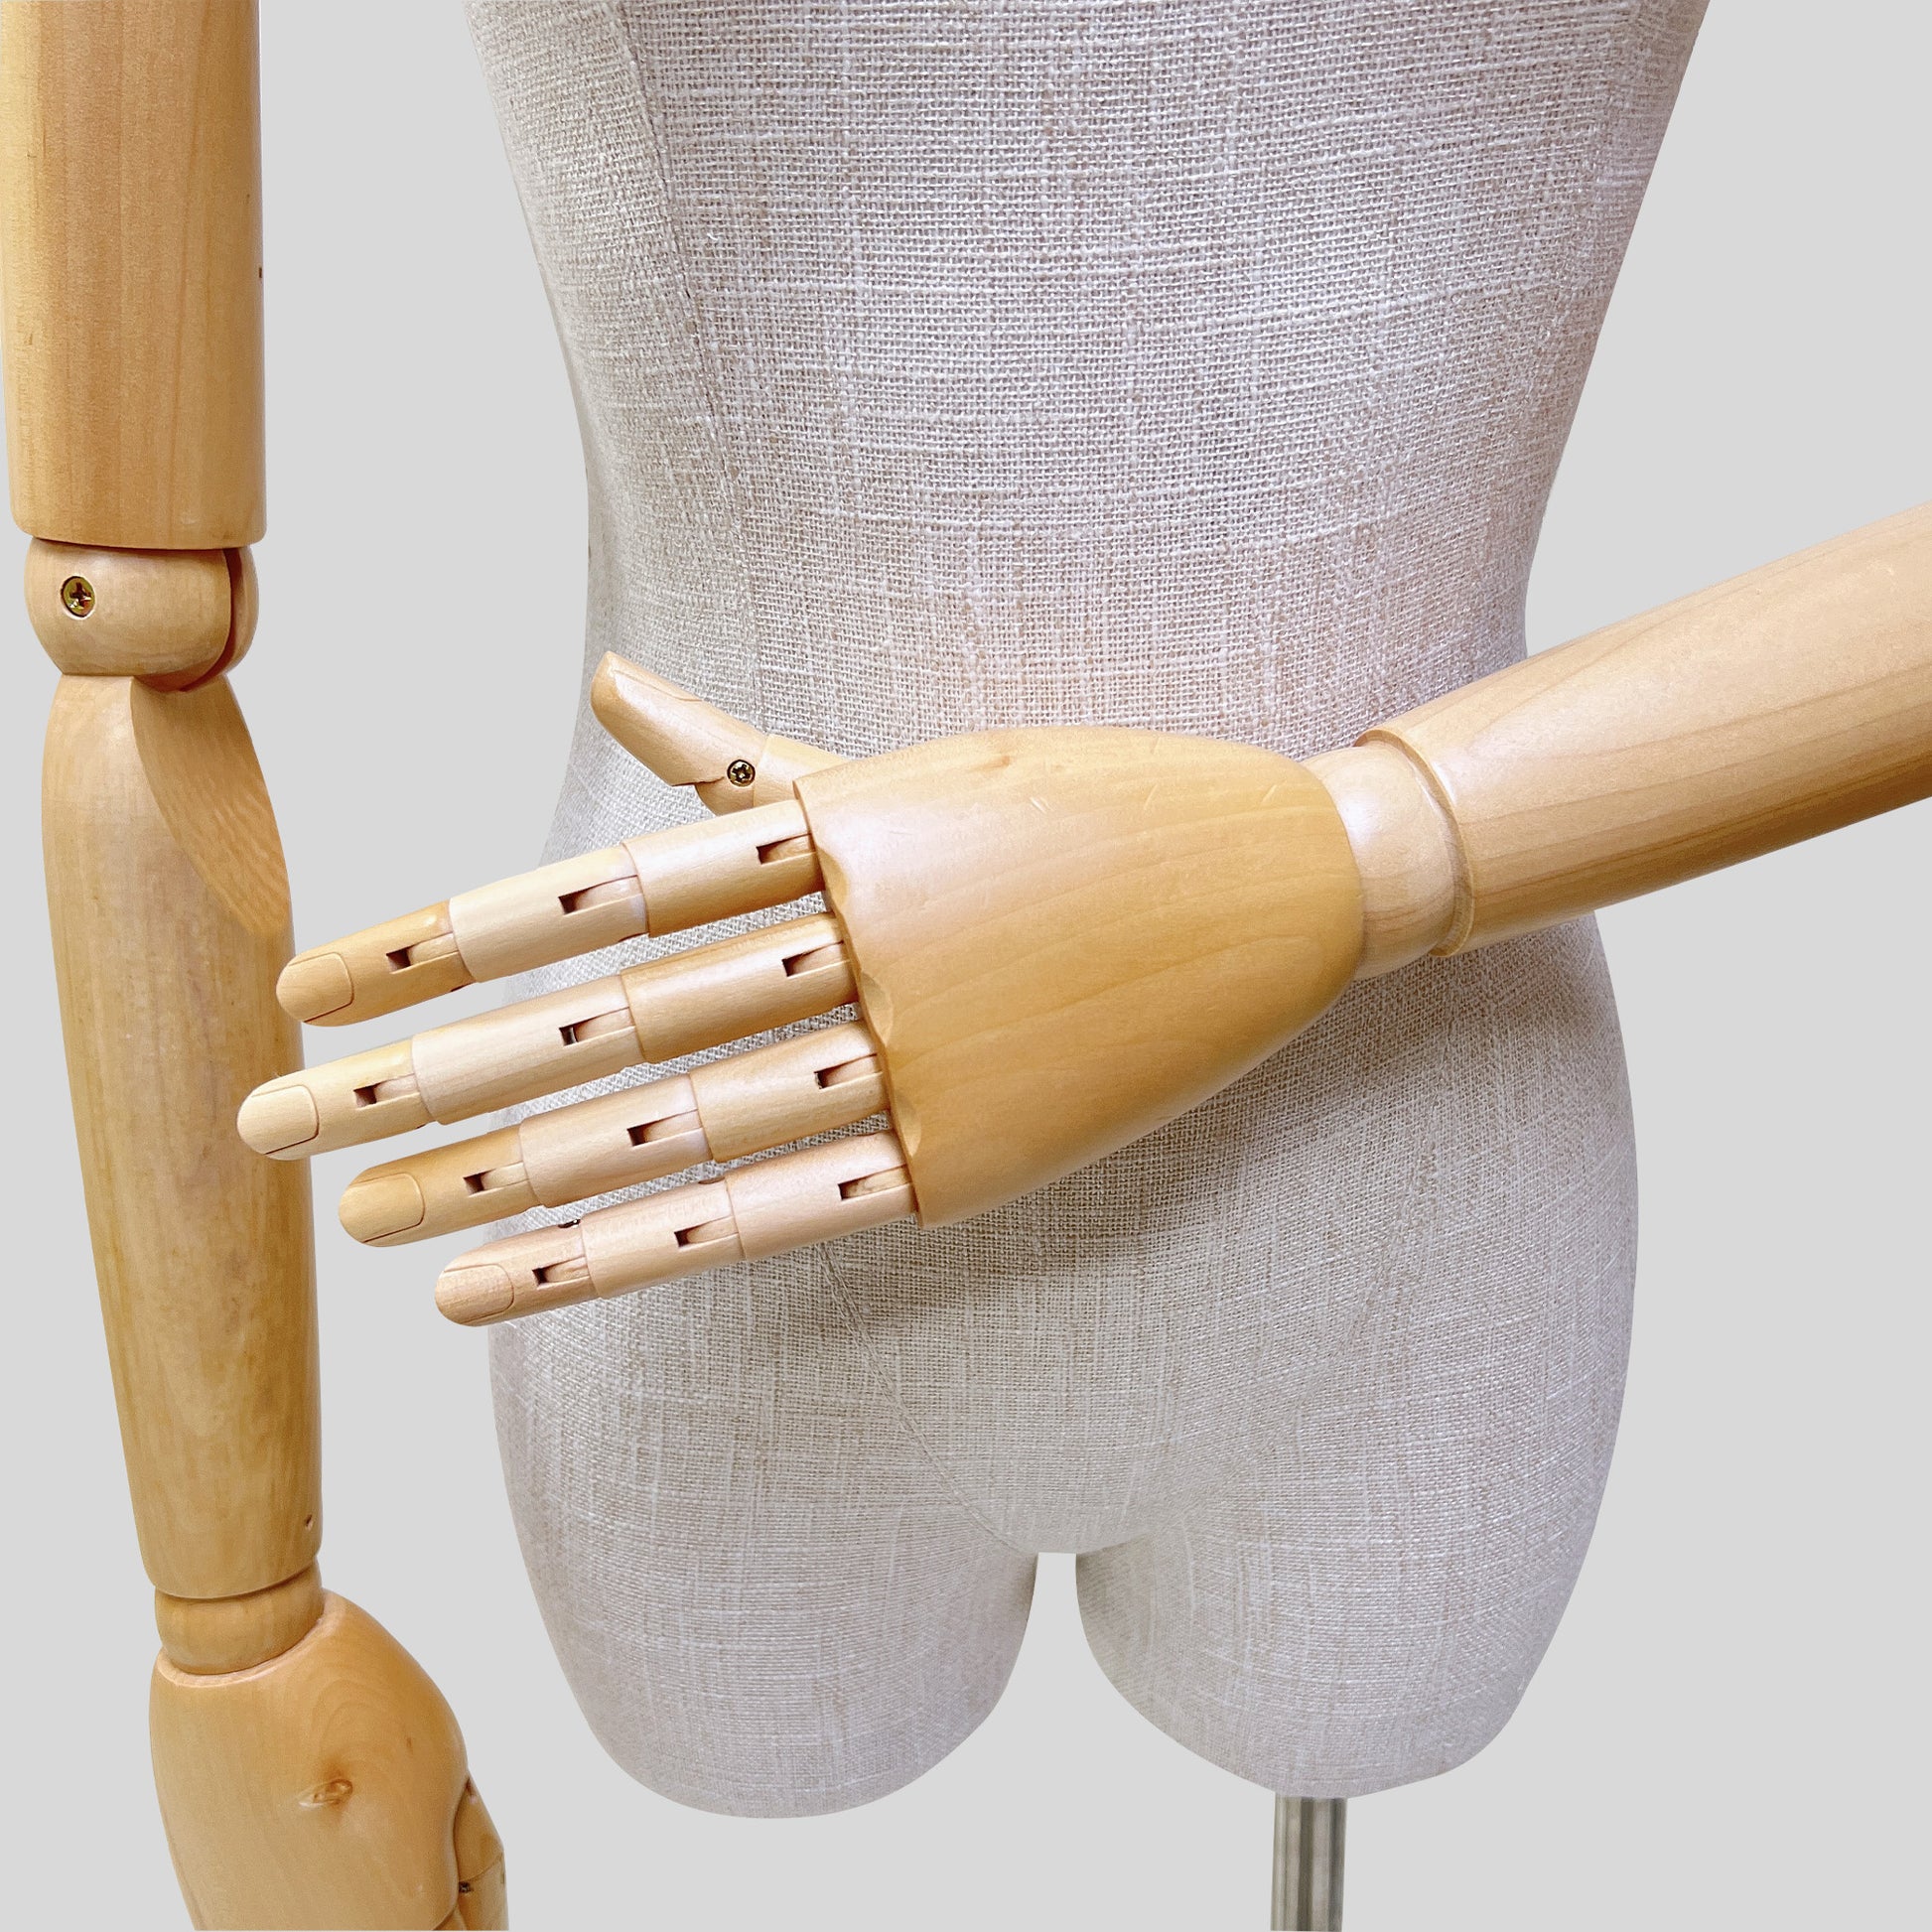 Flexible Wooden Hand Full Body The Mannequin 2 For Men Fashionable